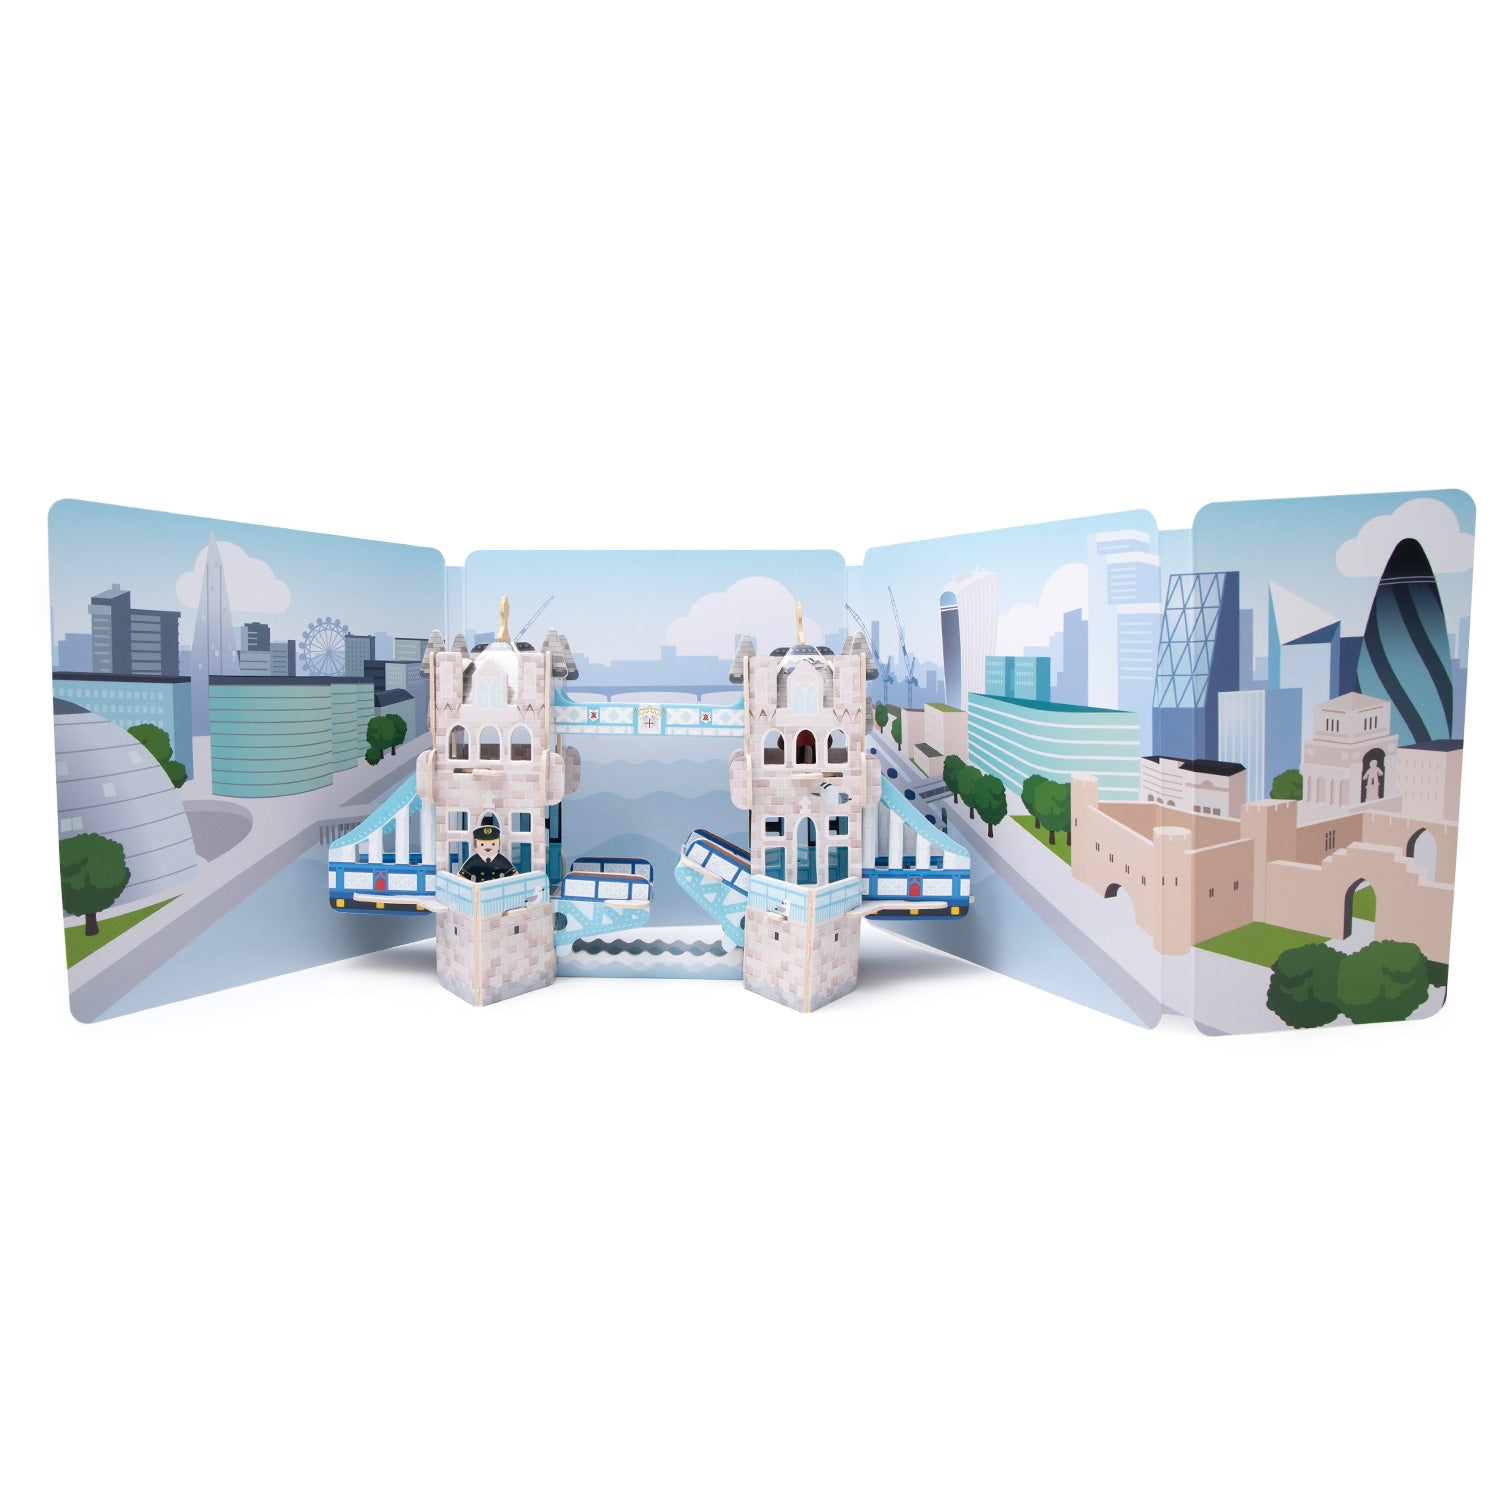 Tower Bridge Playpress Model Toy